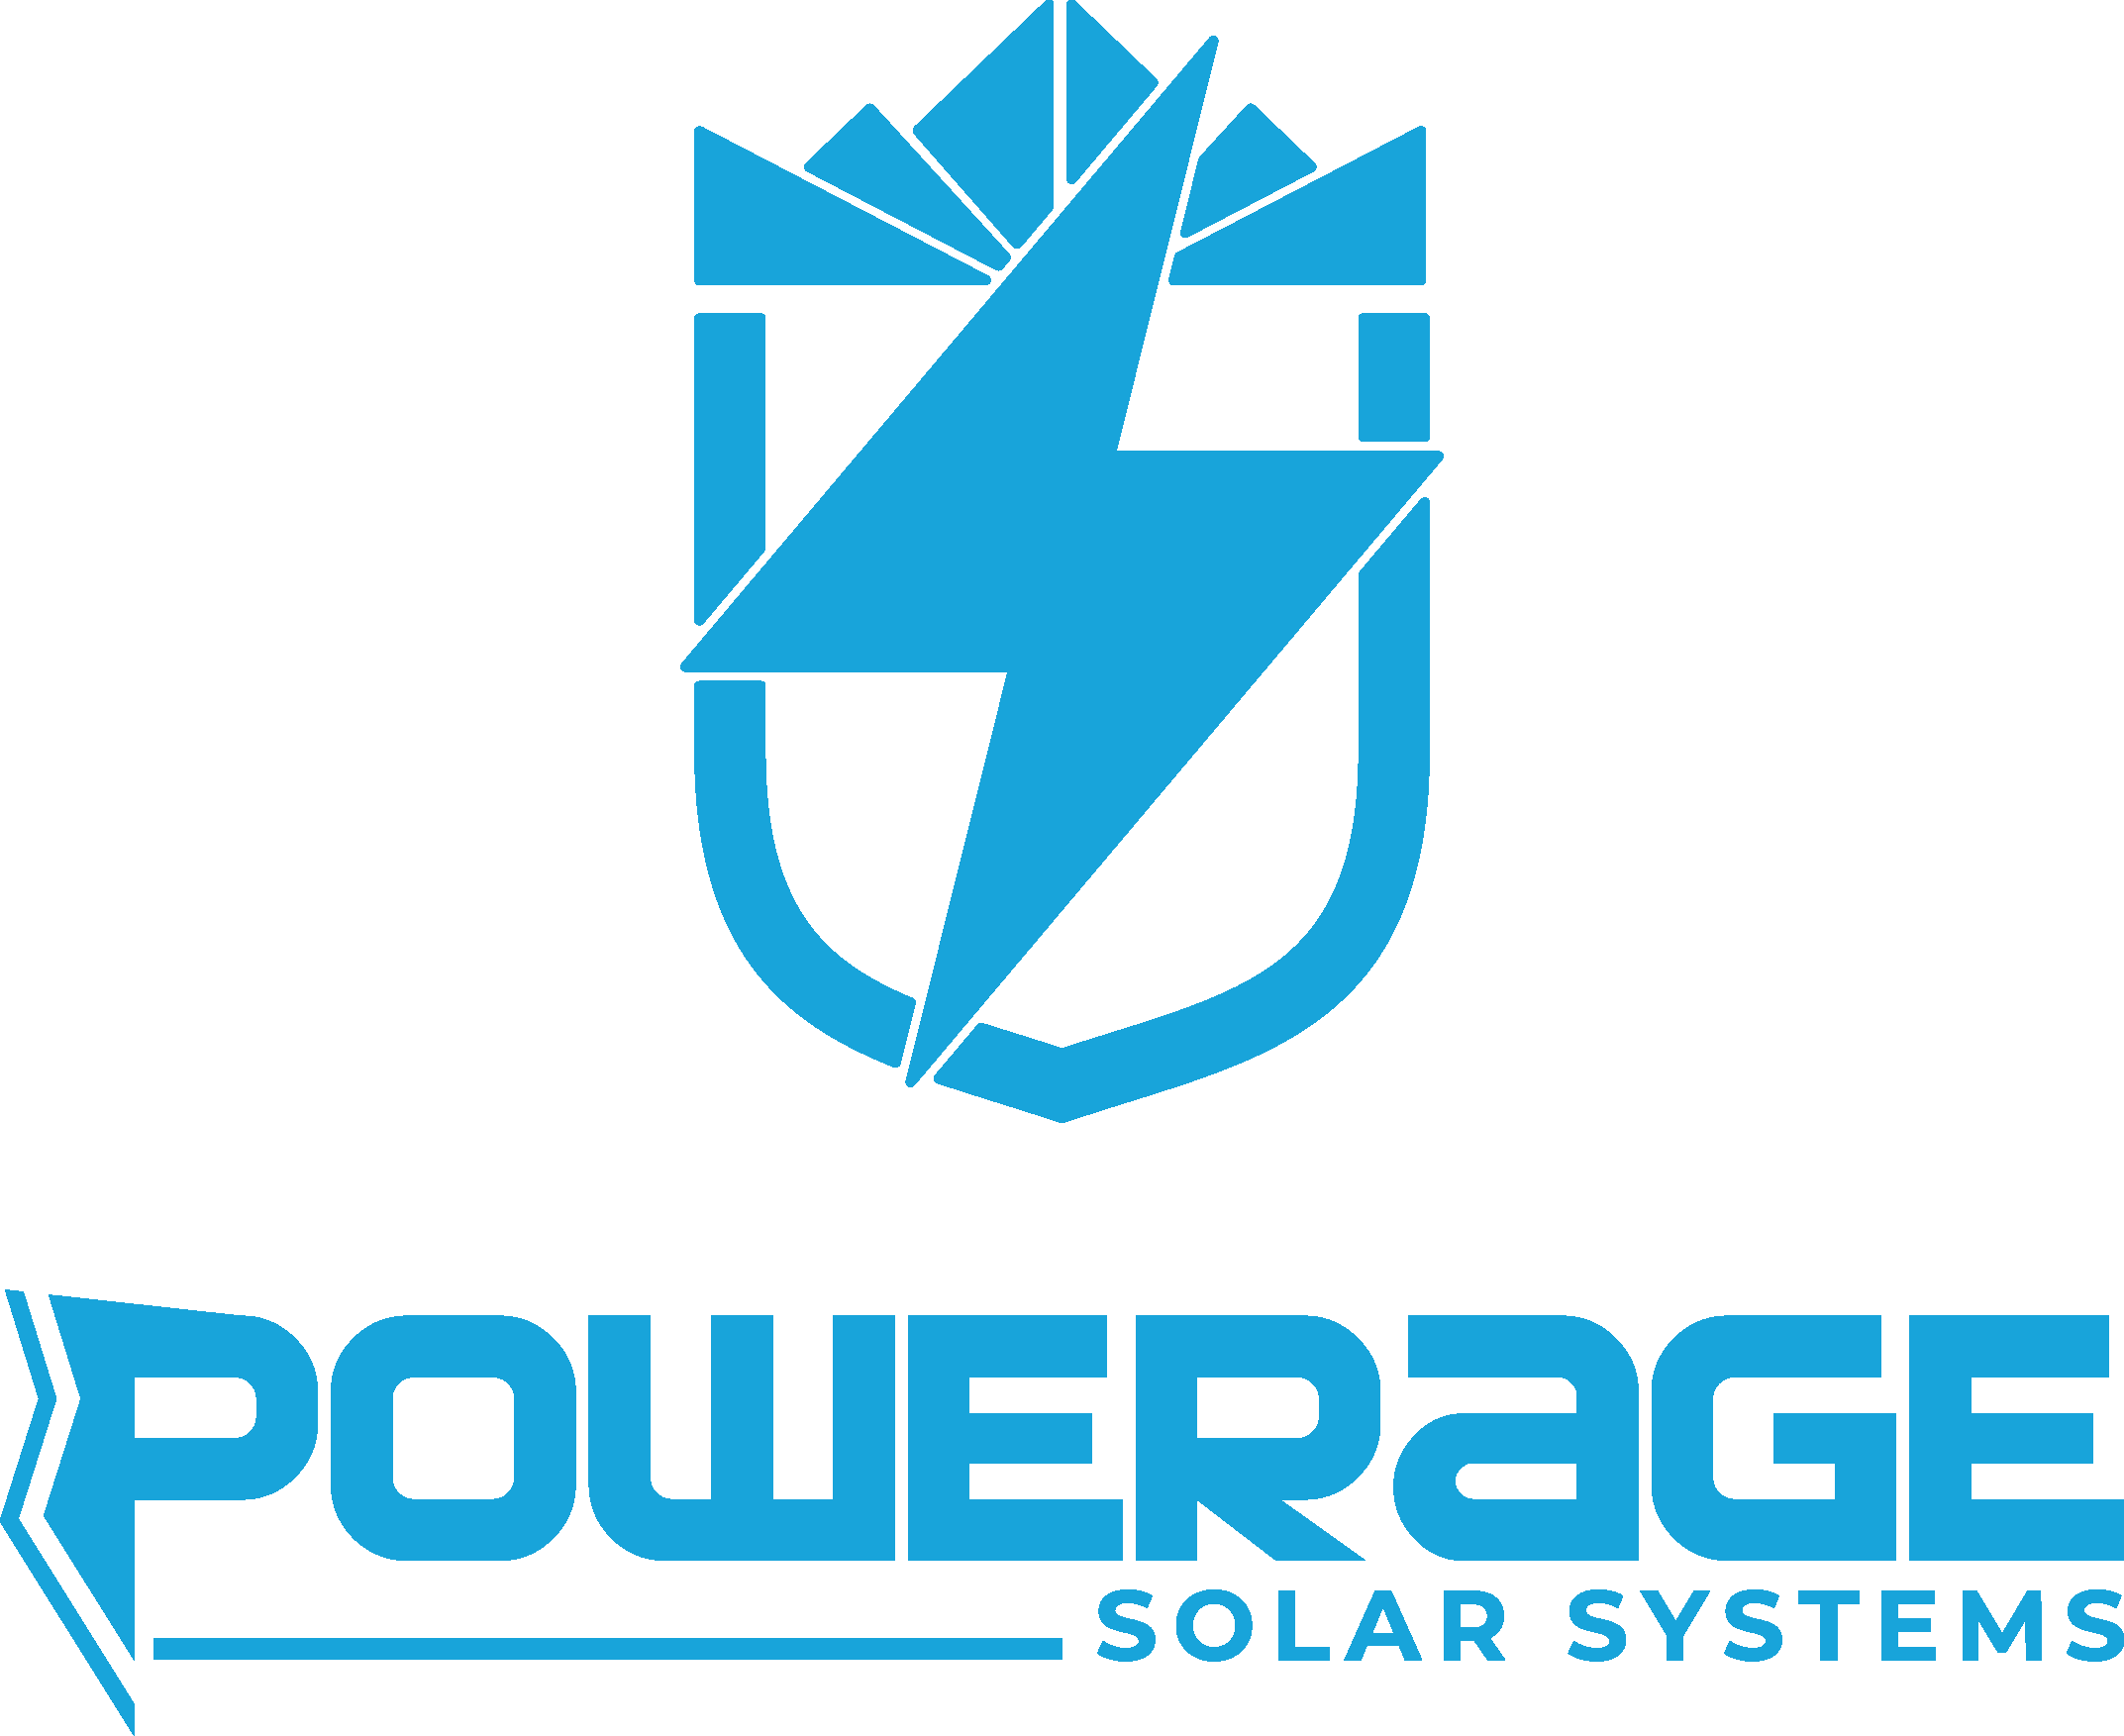 Powerage Solar Systems